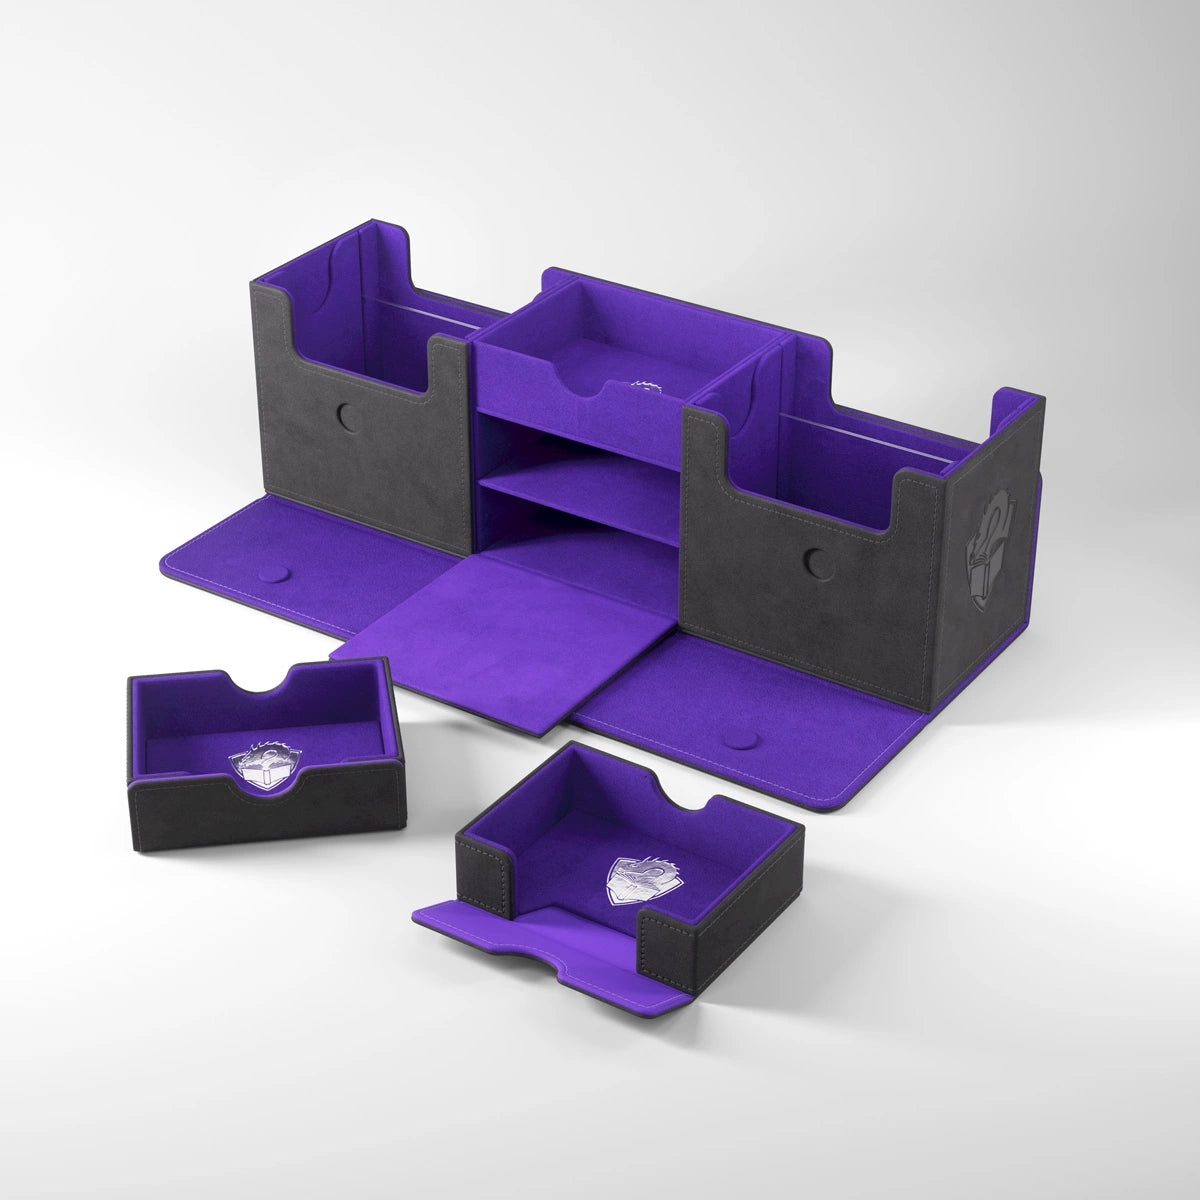 Gamegenic - Deck Box - The Academic - XL Black/Purple (266+)